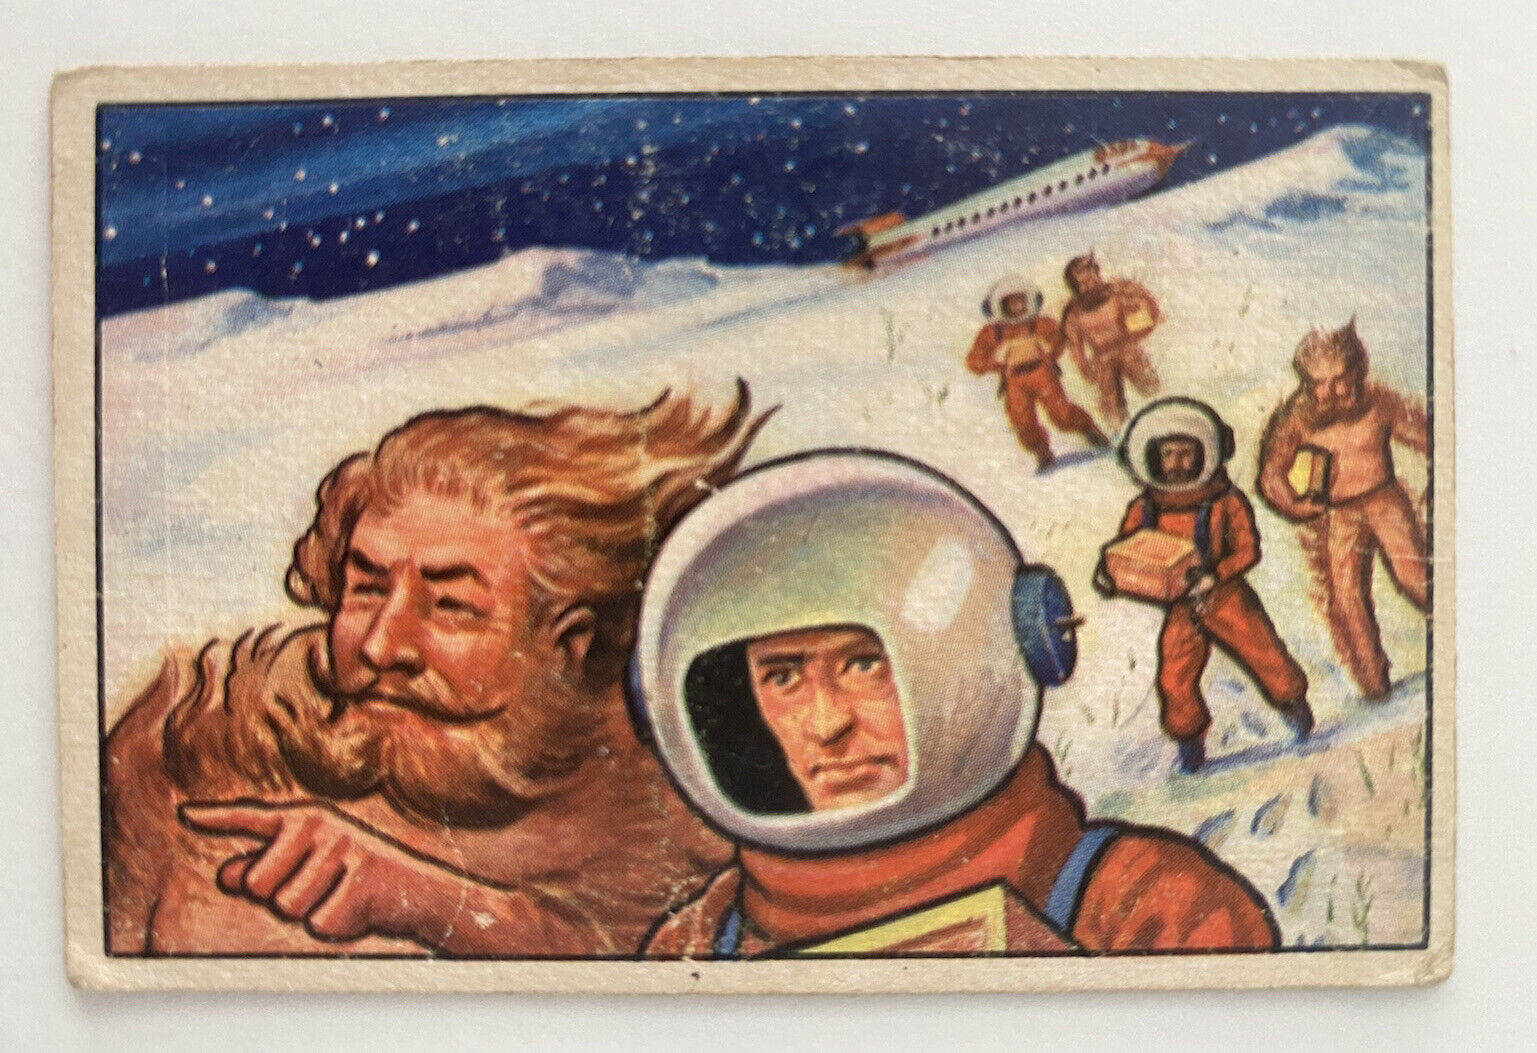 1951 BOWMAN JETS ROCKETS SPACEMEN #64 Fur Men of Ganymede